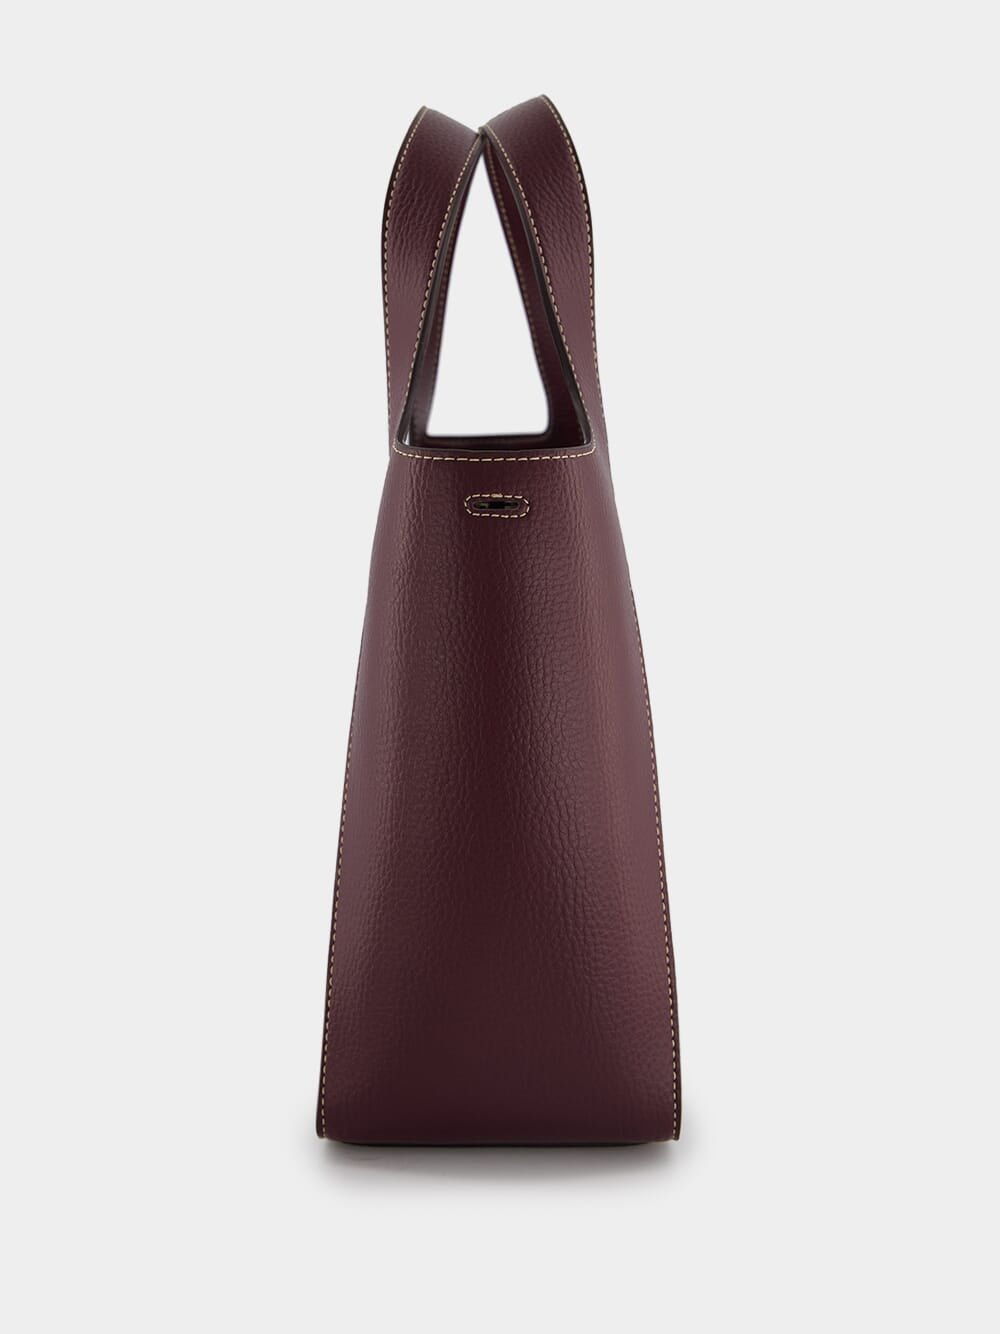 Stella McCartneyLogo Embellished Tote Bag at Fashion Clinic